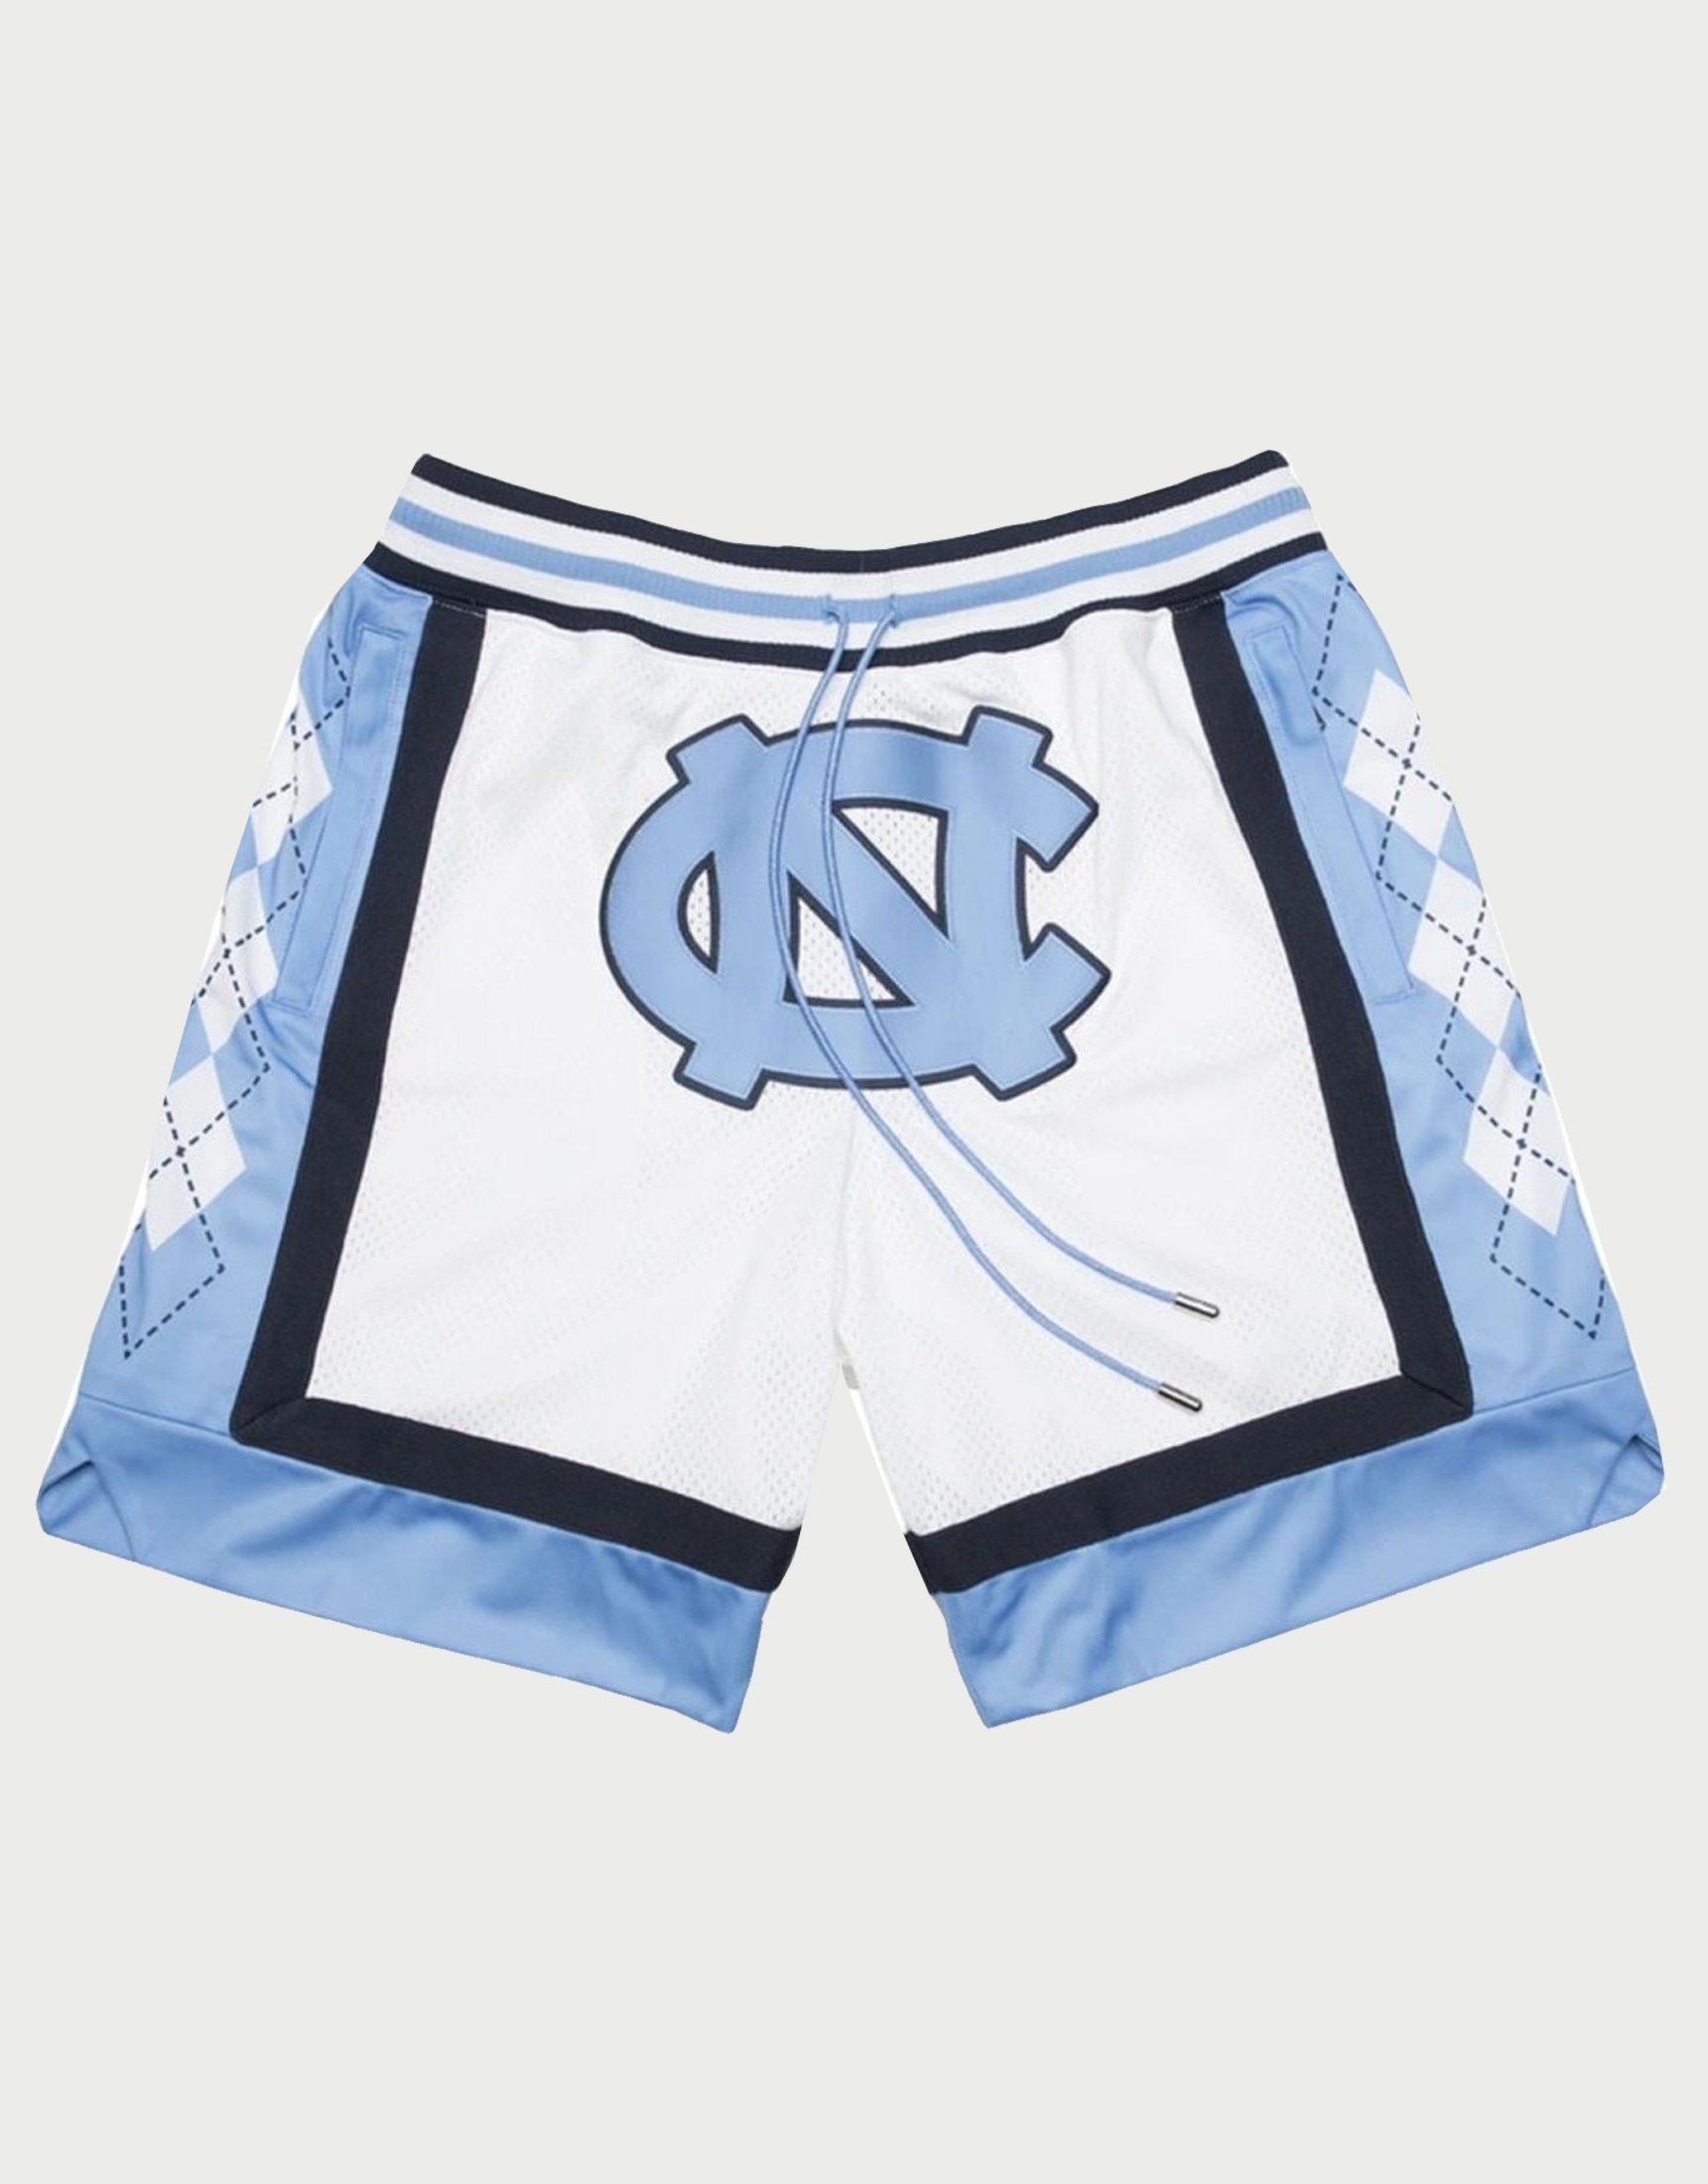 Mitchell & Ness Men's North Carolina Tar Heels White Authentic Basketball Shorts, Medium